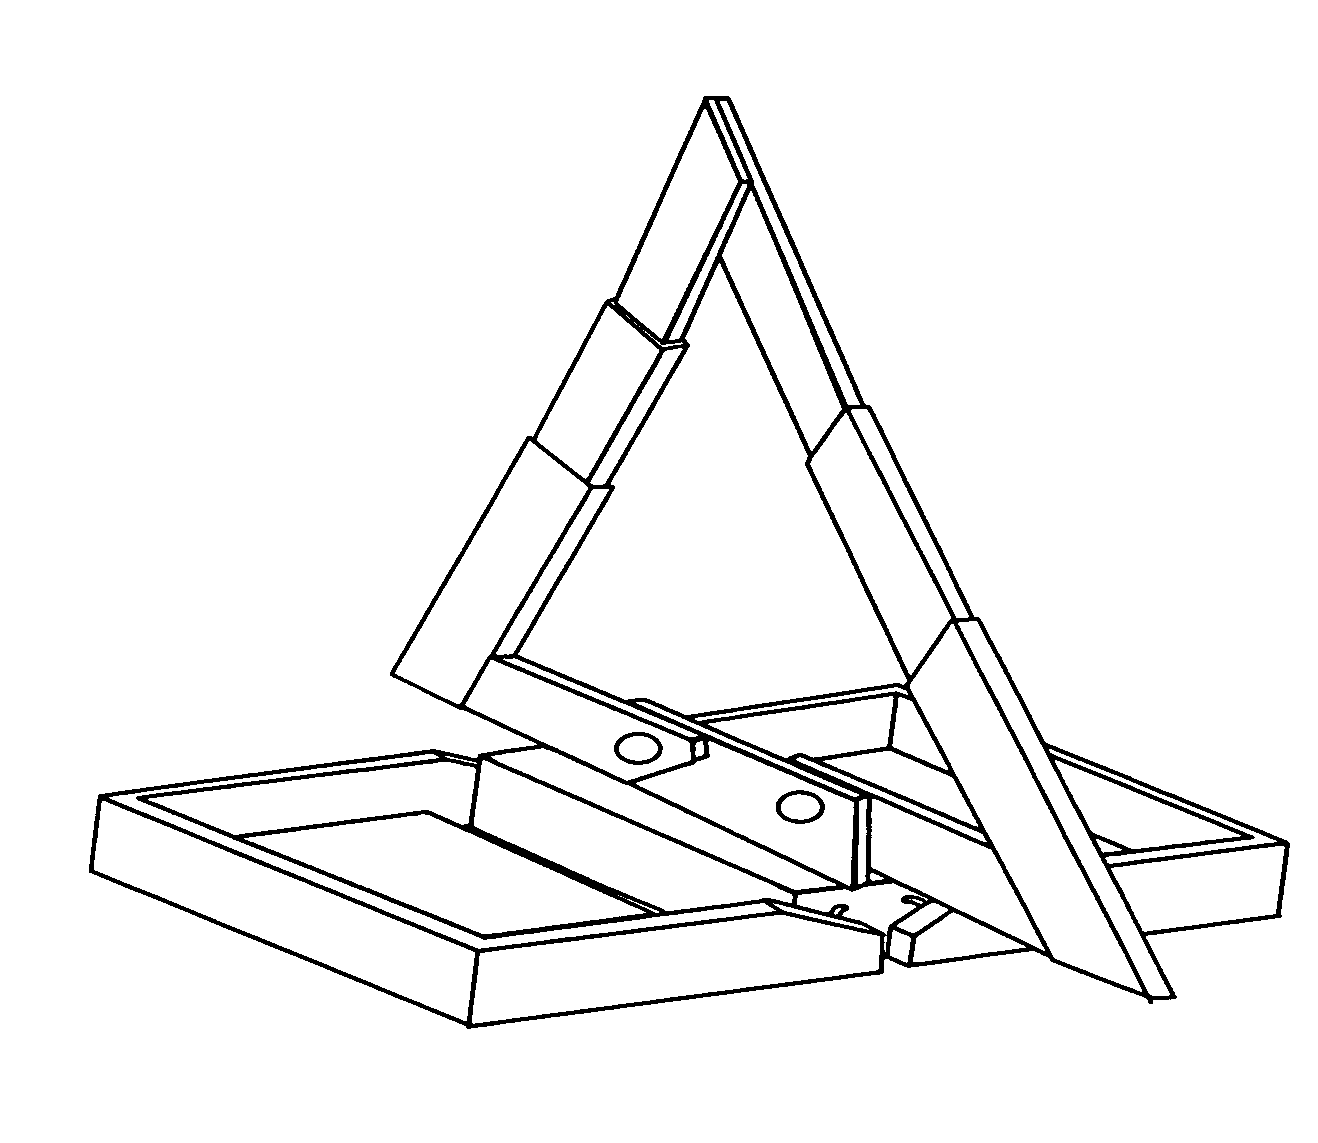 Triangular retractable safety marker